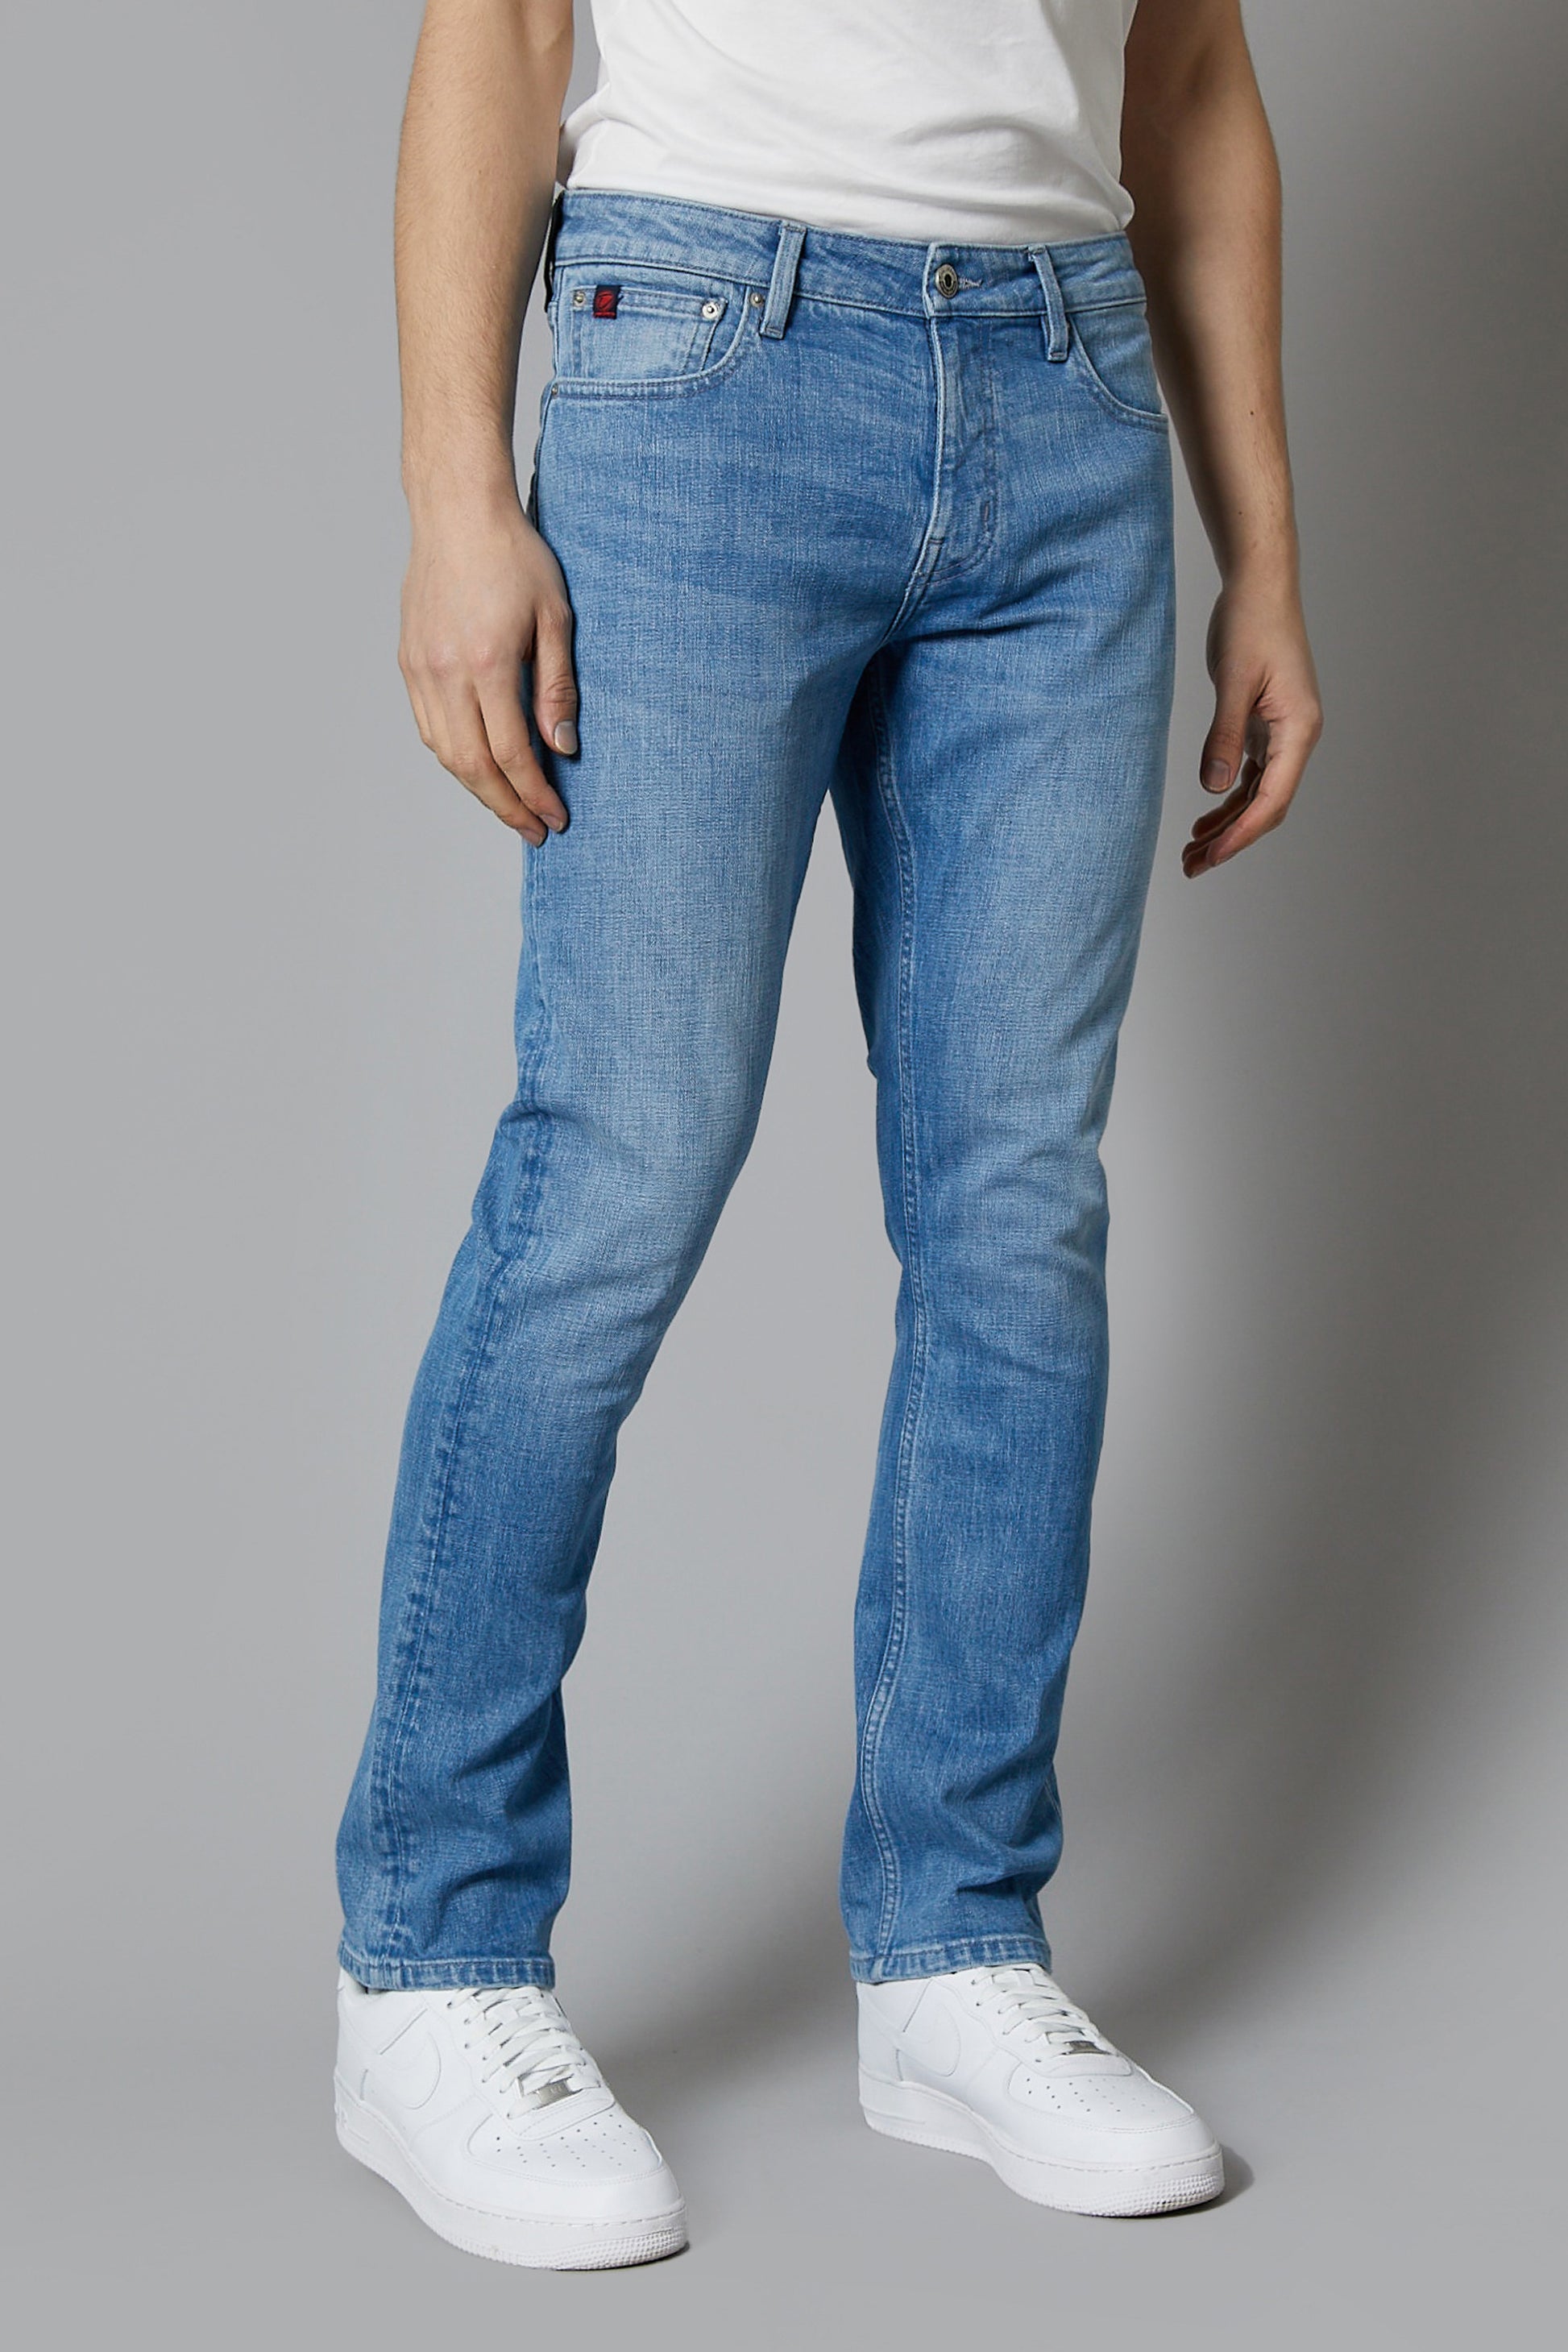 DML Jeans Alaska mens light Blue straight leg denim jeans